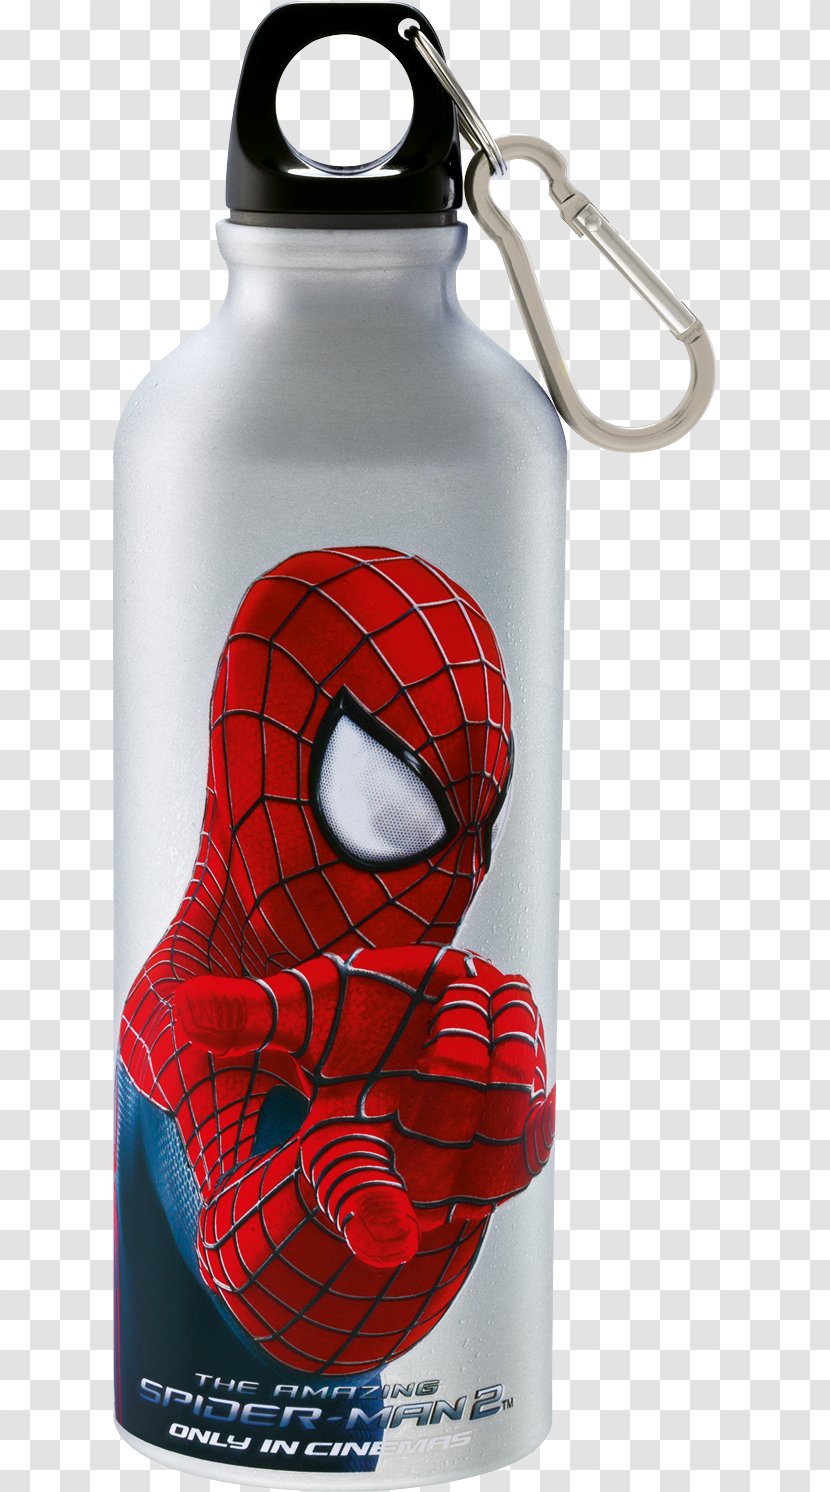 Spider-Man Marvel Comics Superhero Movie Water Bottles - Amazing Spiderman 2 - Spider-man Transparent PNG